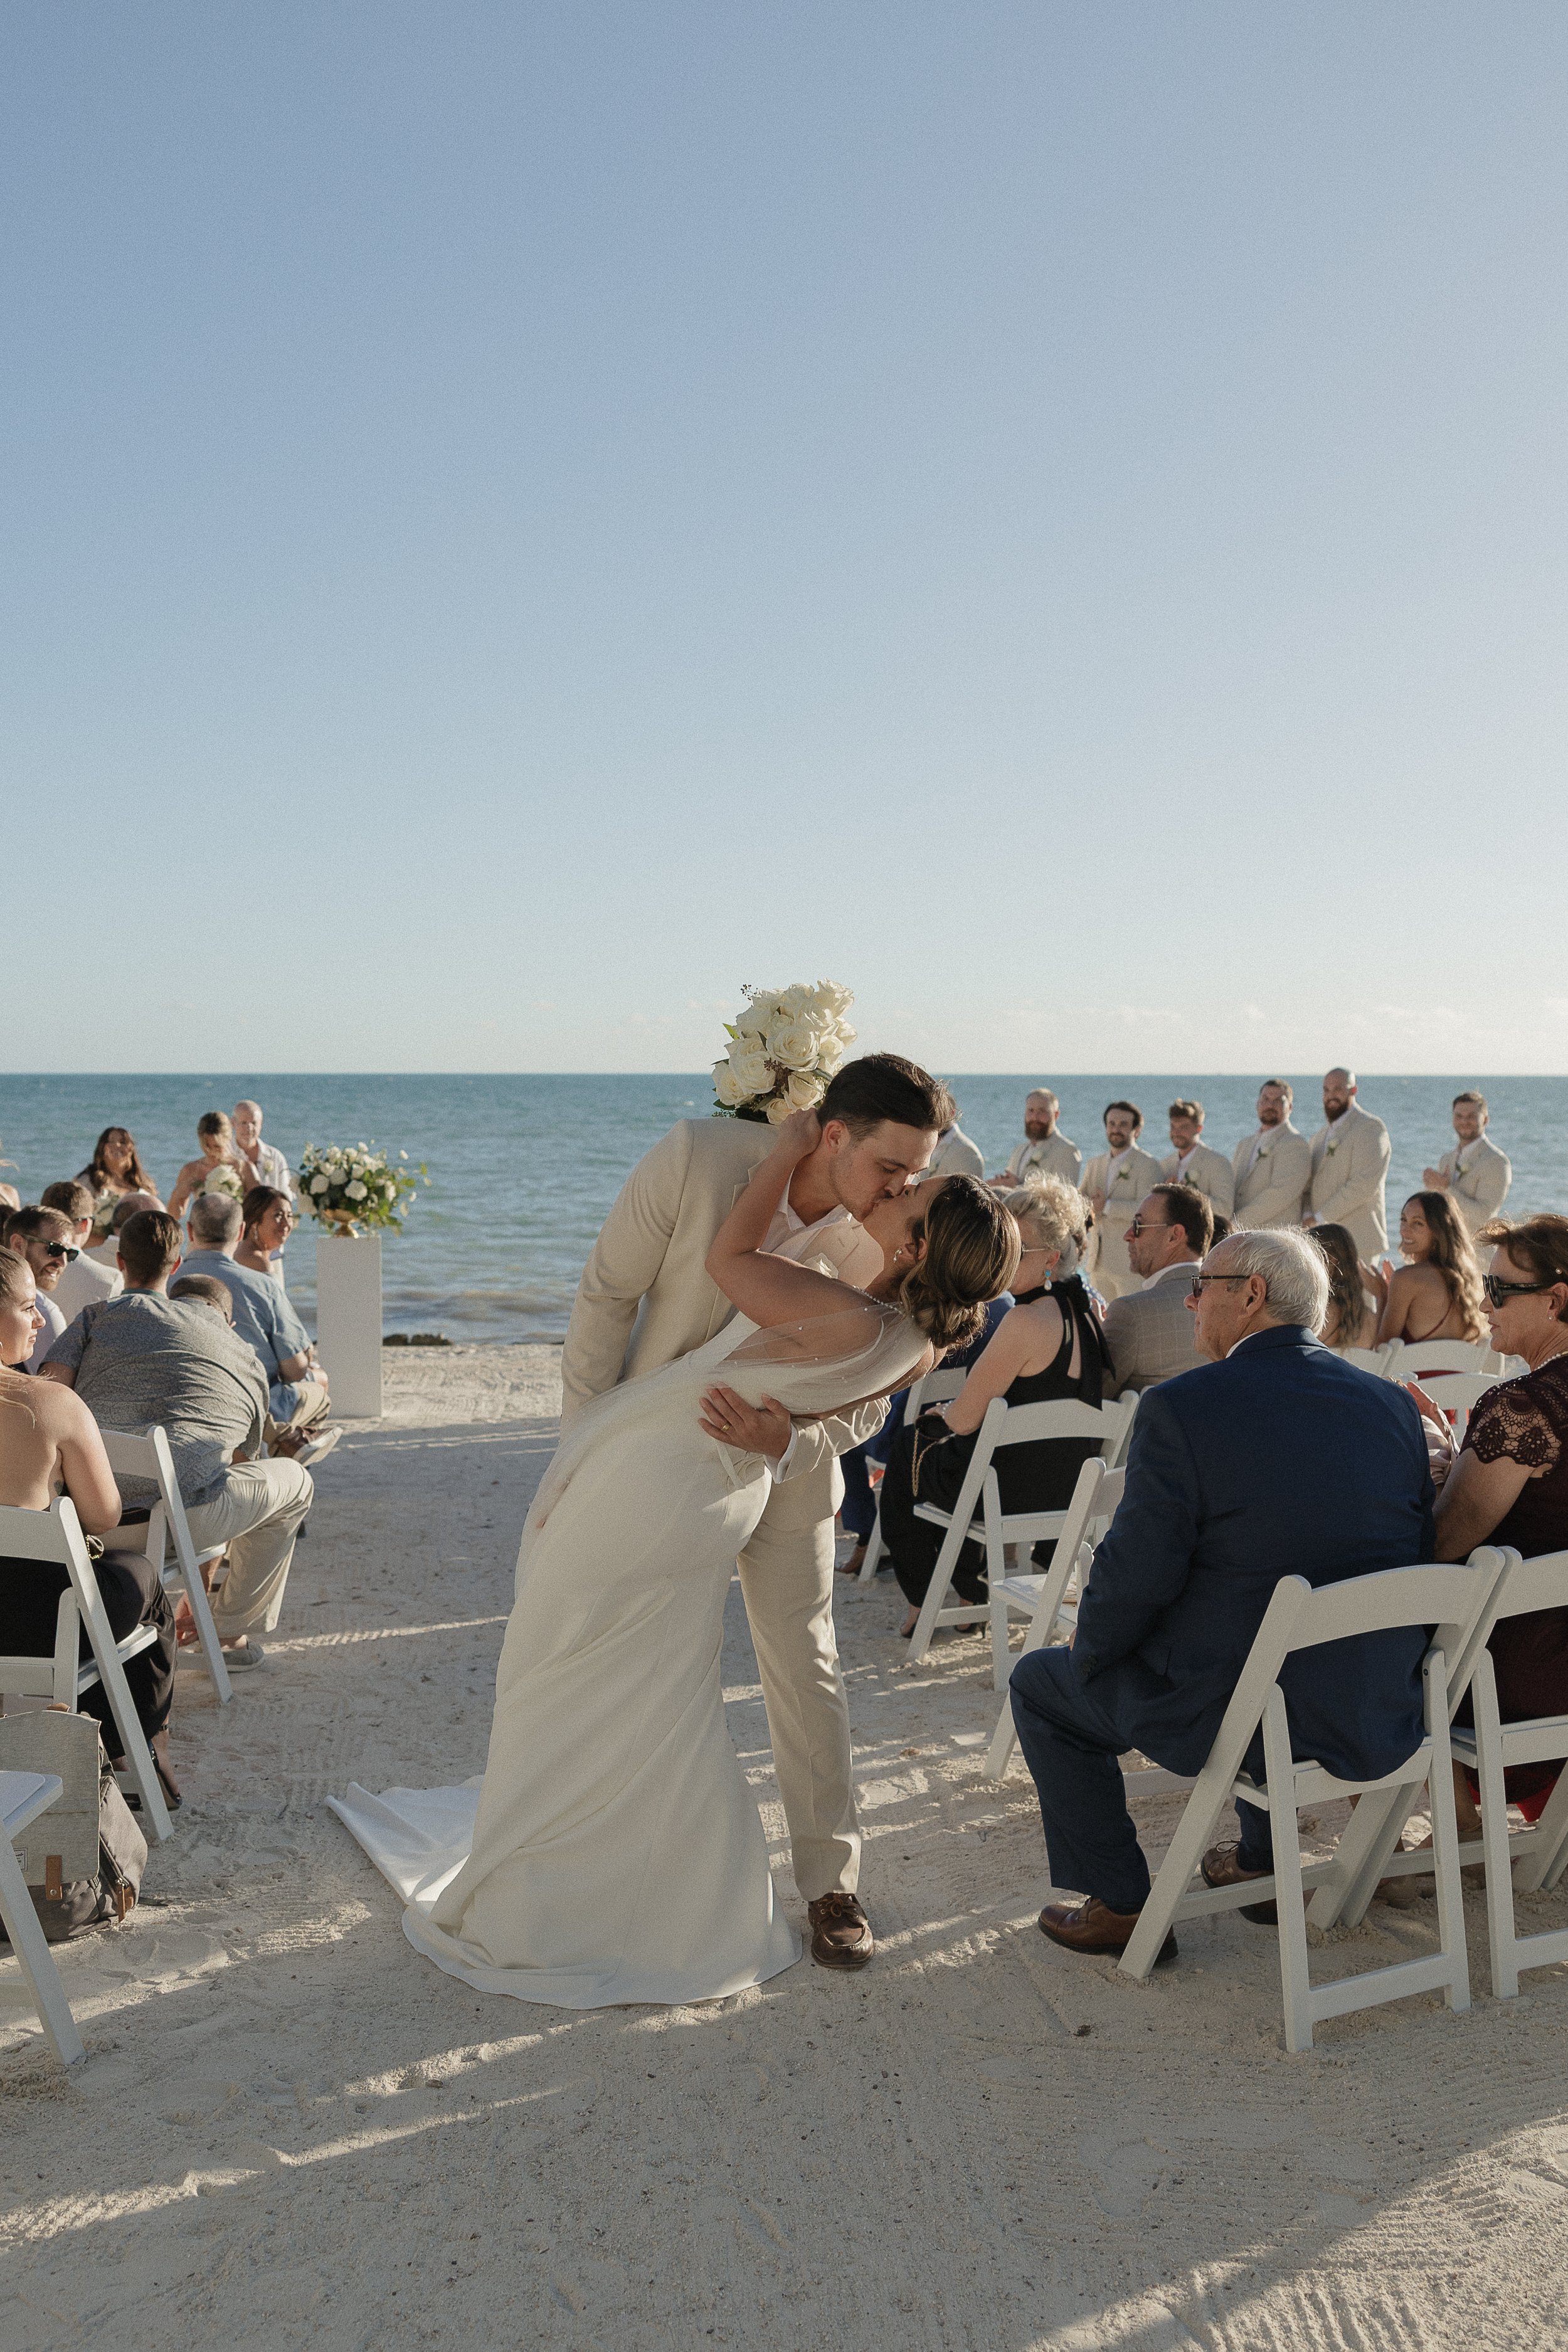 4 CASA MARINA RESORT KEY WEST - LUXURY WEDDING - FLORIDA KEYS WEDDING PLANNER - WEDDING DESIGN - WEDDING PHOTOGRAPHY - KEY WEST BRIDE - WEDDING DESIGN - JUST MARRIED - DESTINATION WEDDING - THE FLORIDA KEYS.jpg